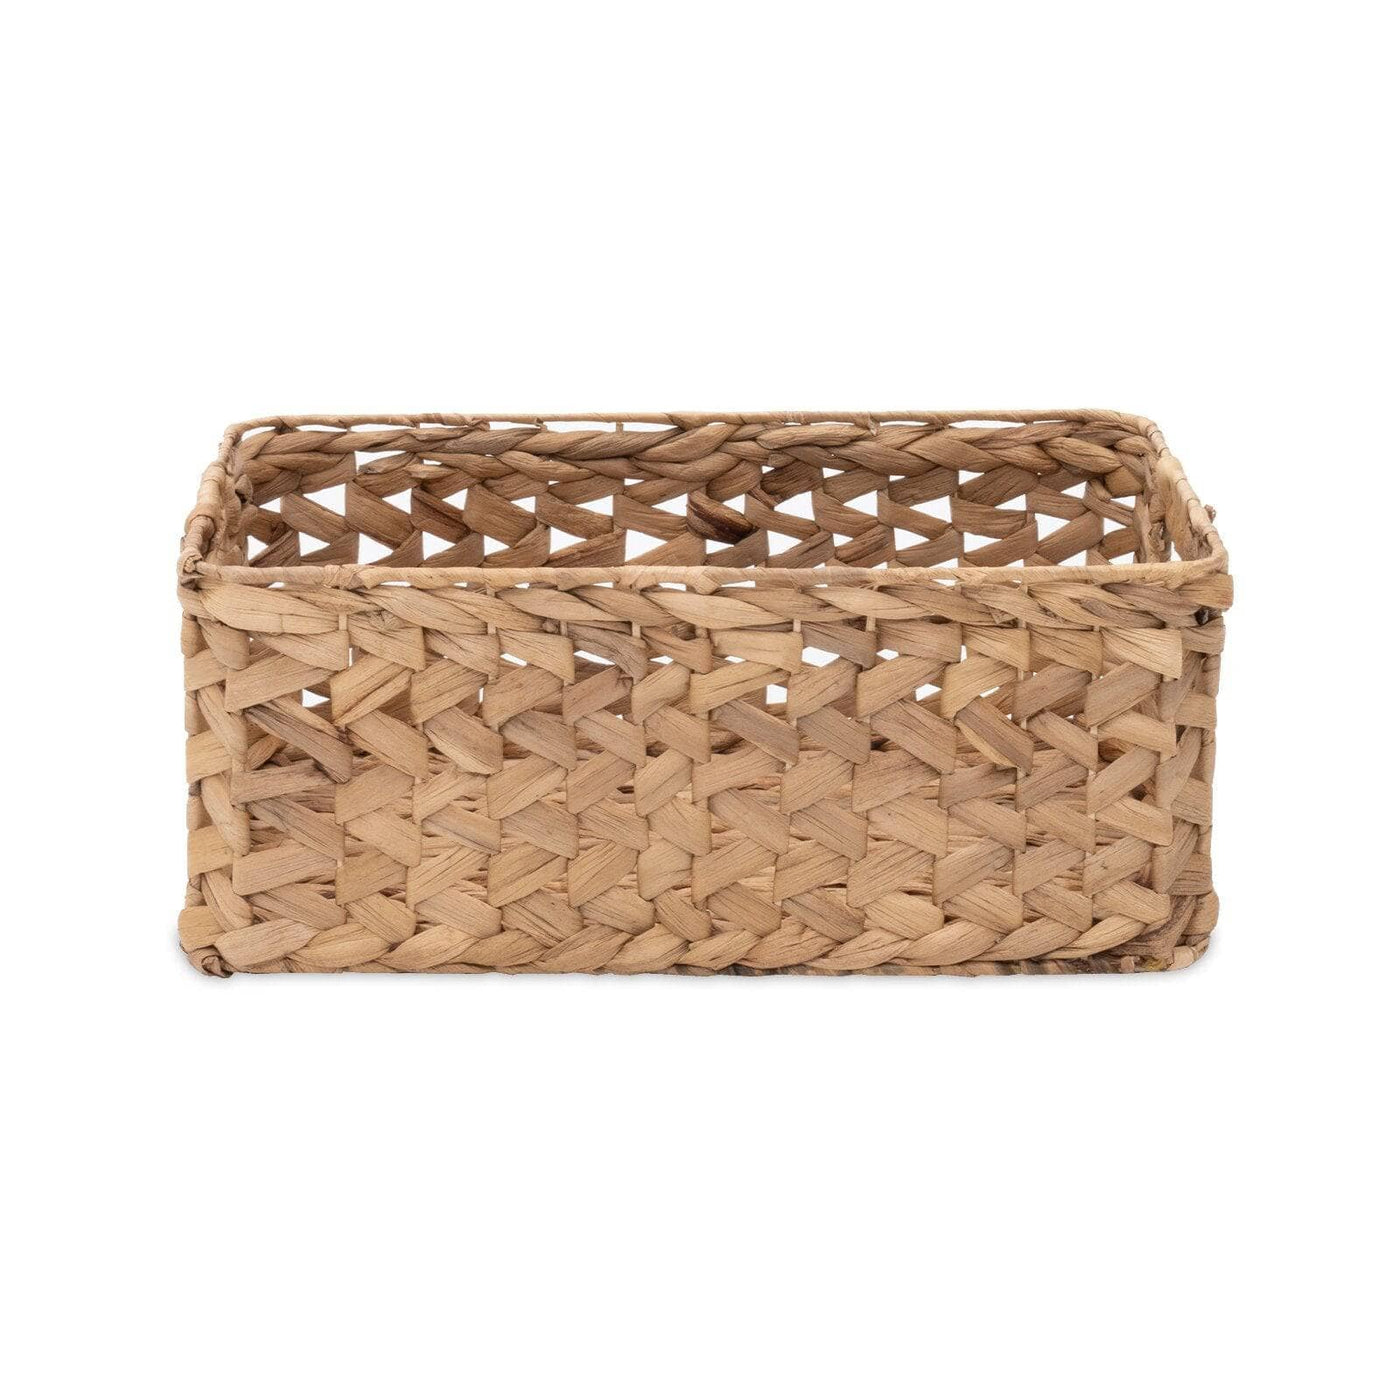 William Water Hyacinth Laundry Box Basket, Natural, XL - 1